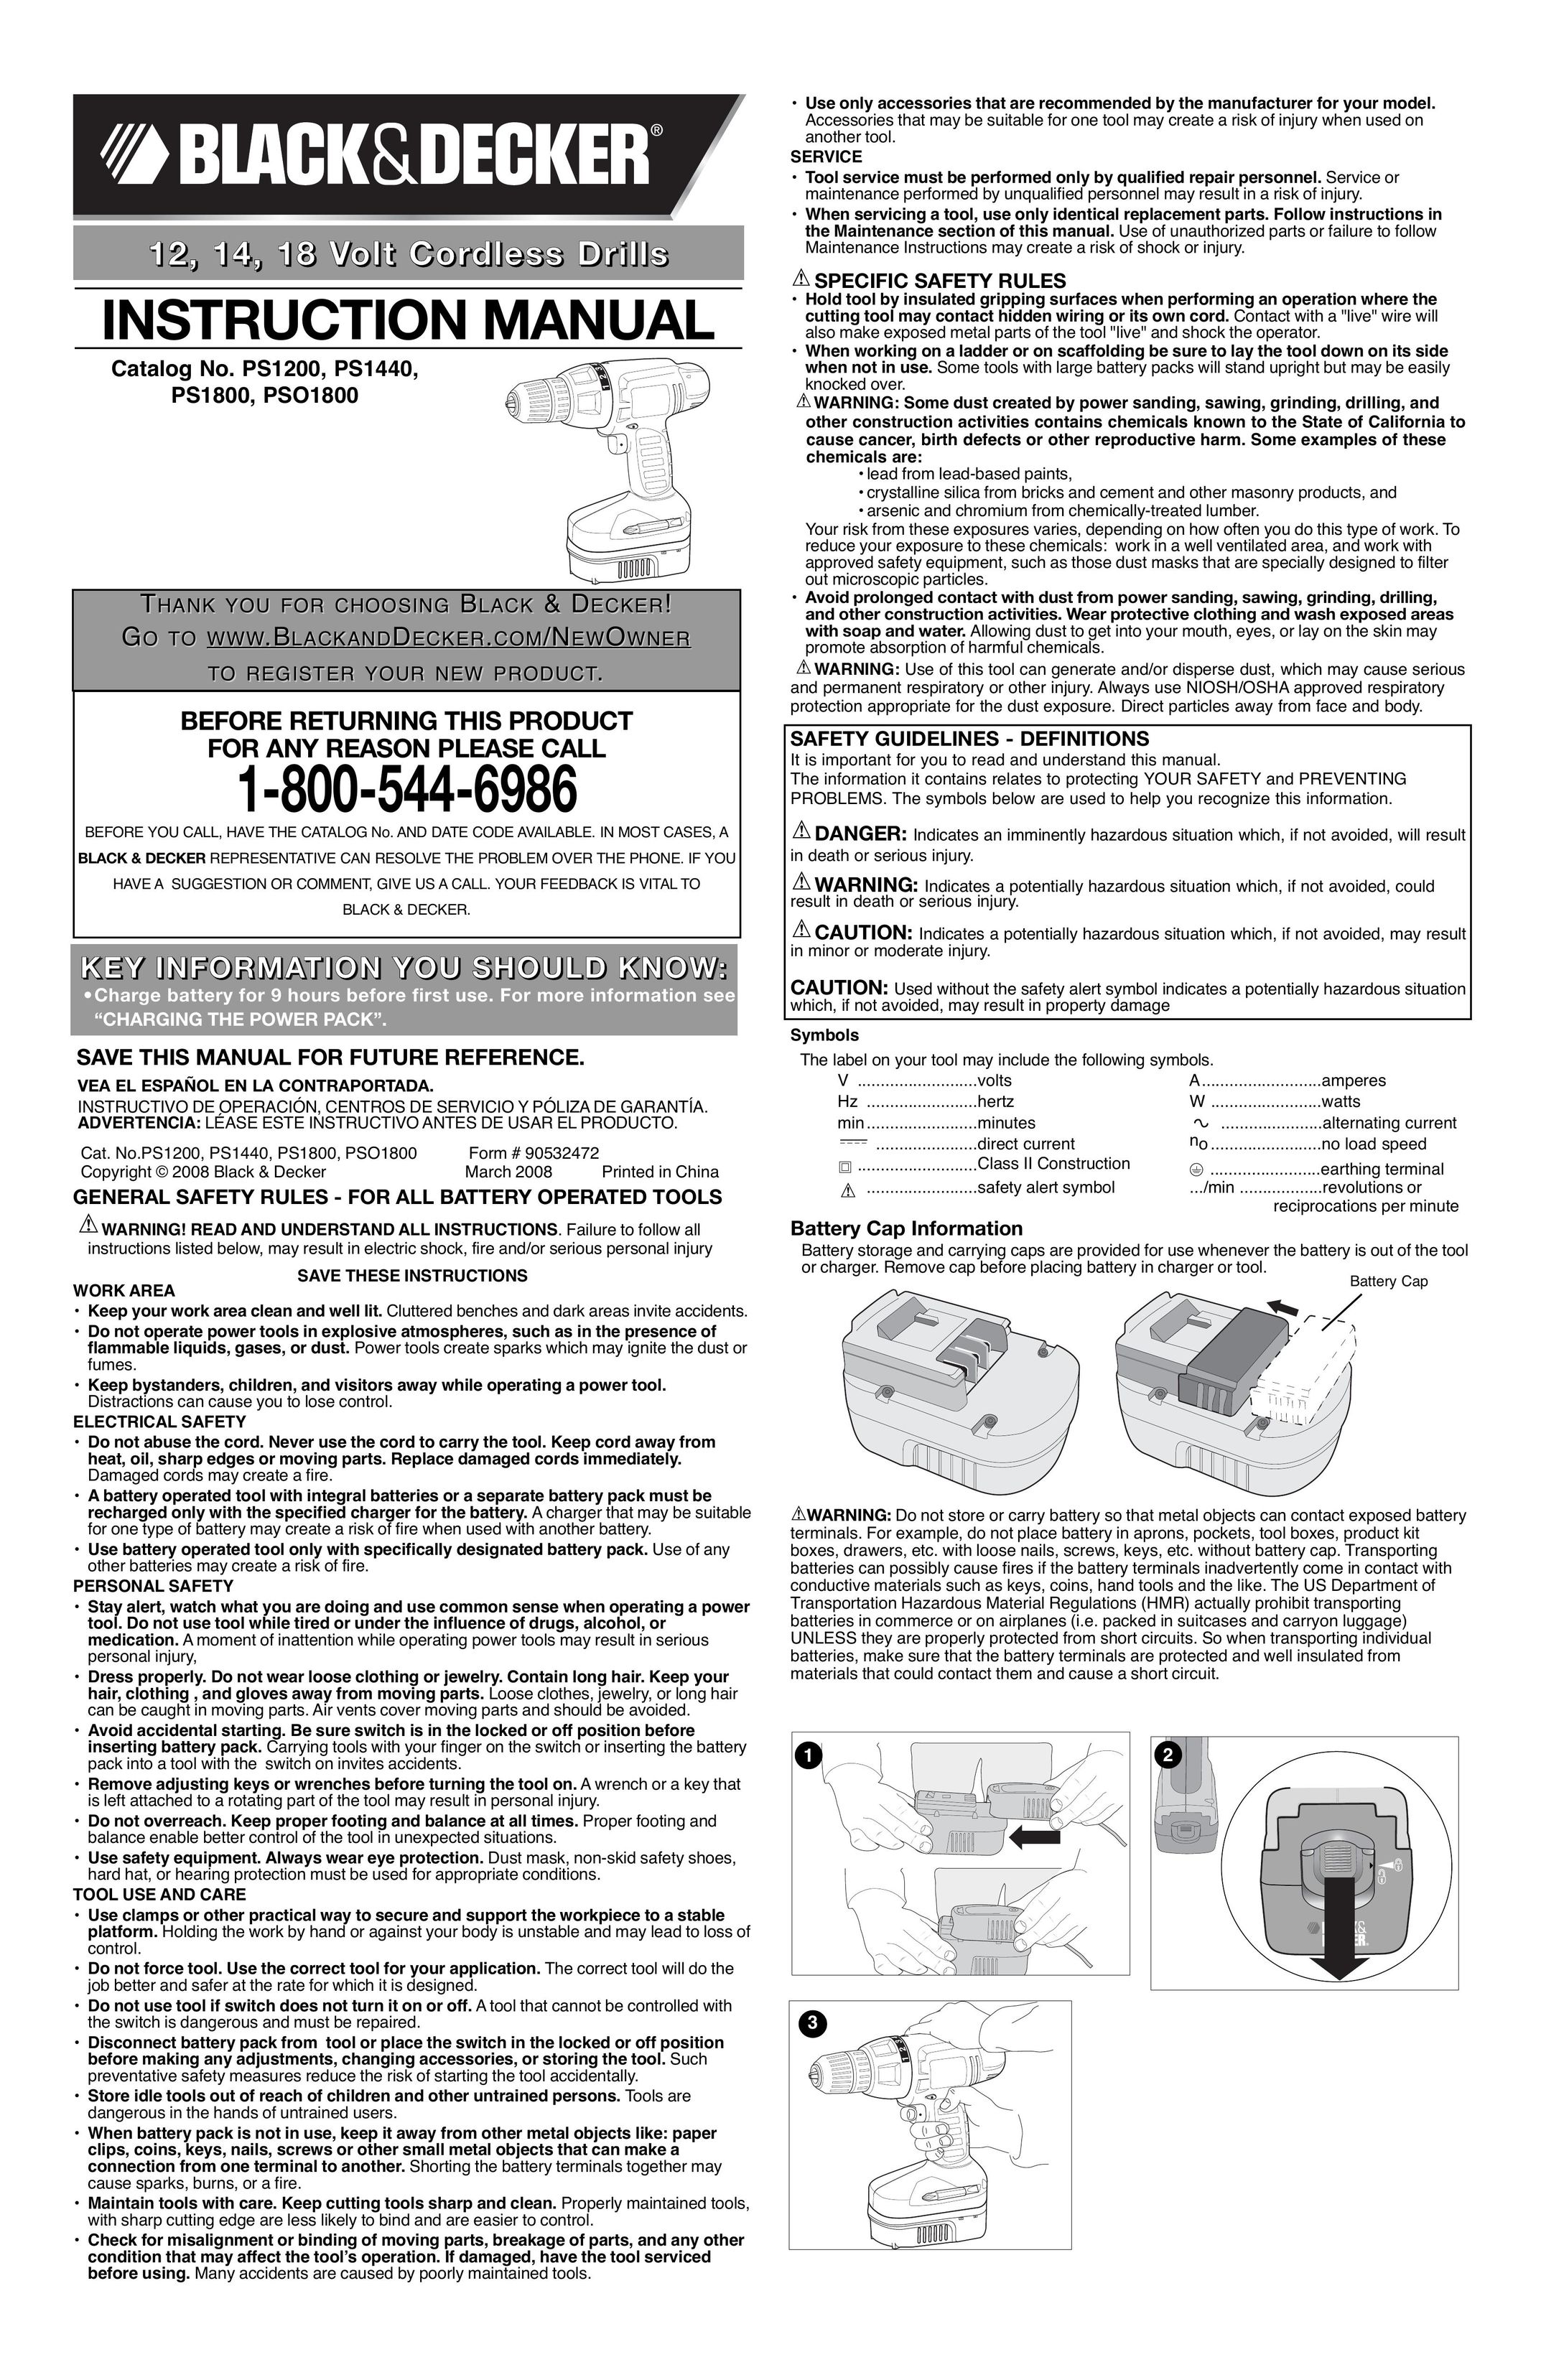 Black & Decker 90532472 Cordless Drill User Manual